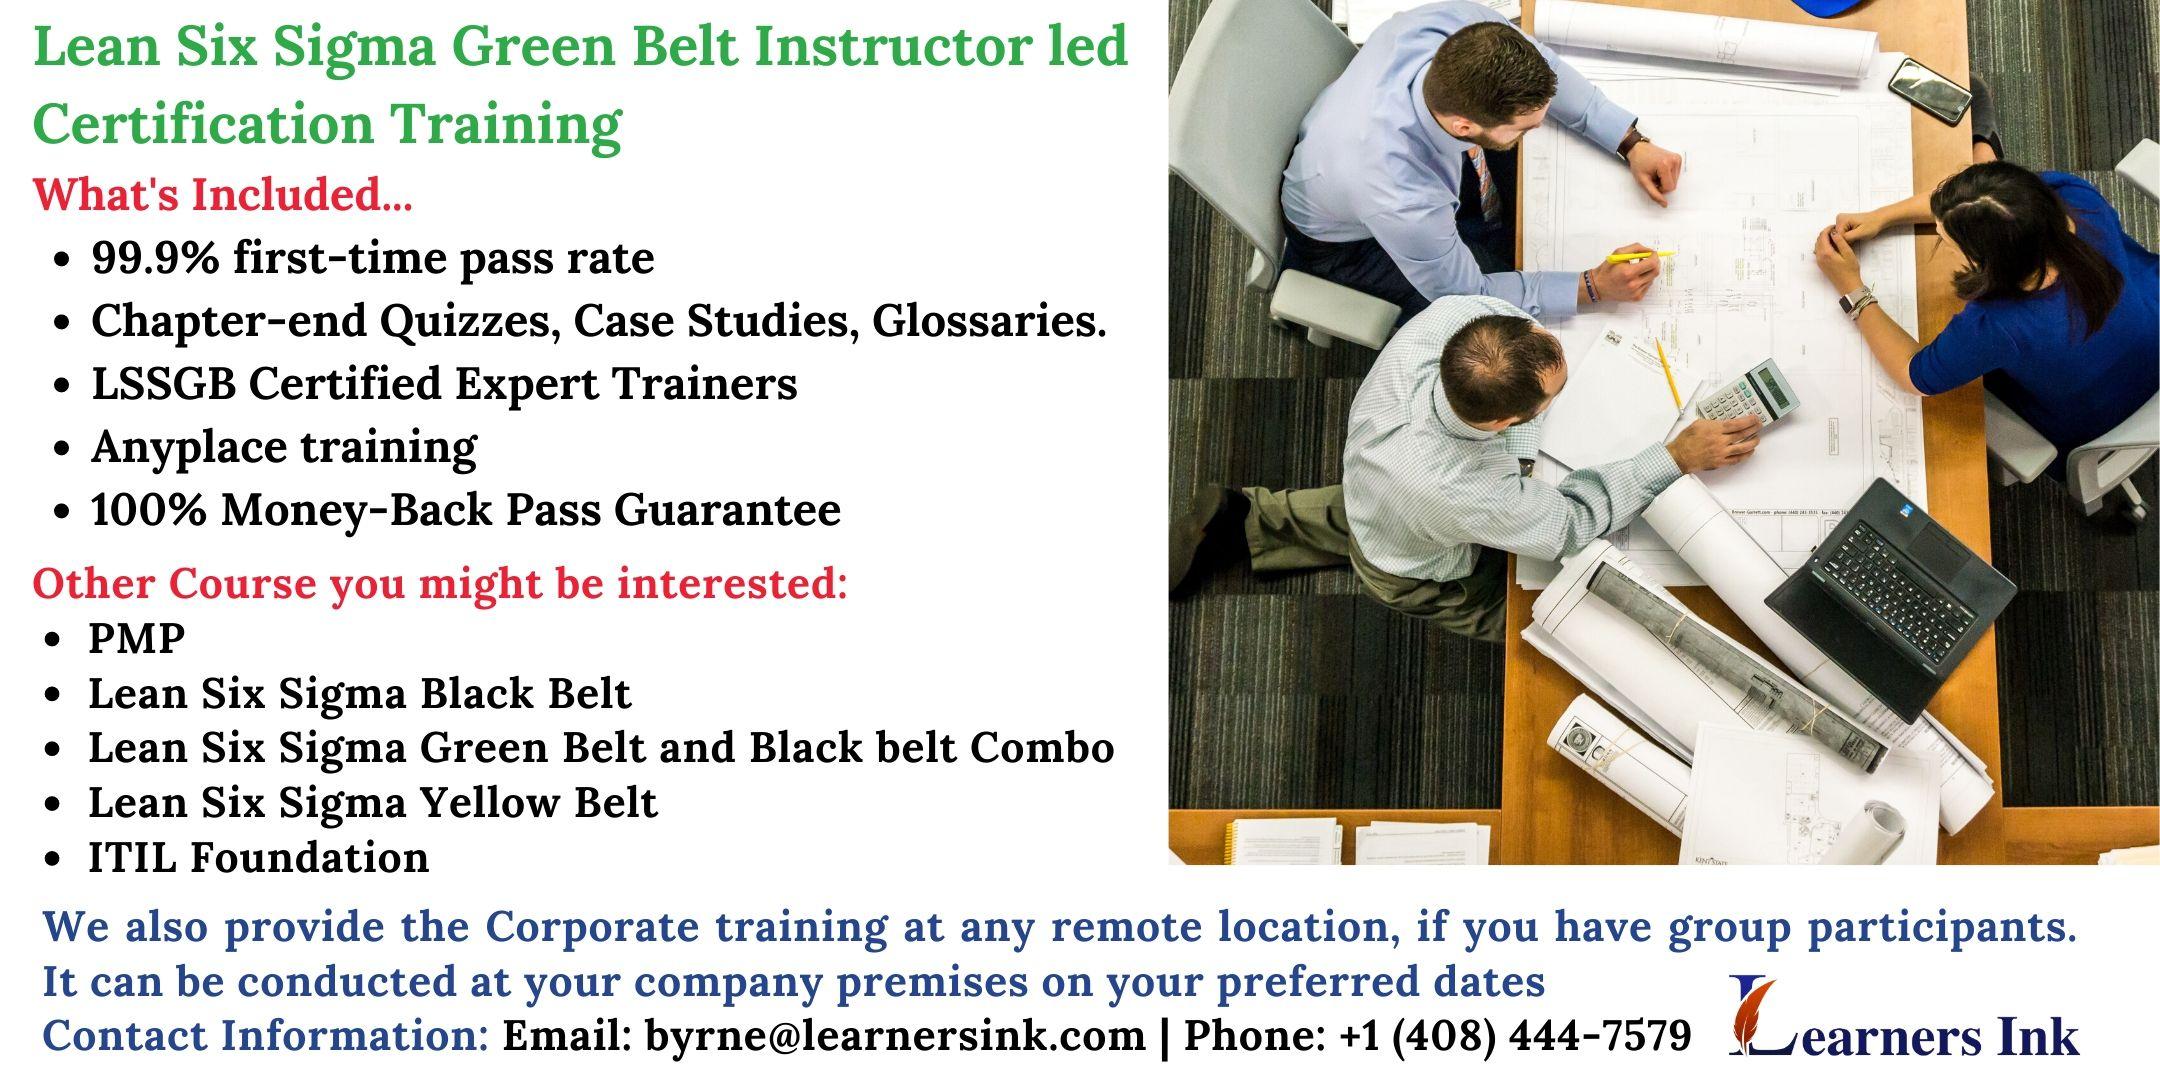 Lean Six Sigma Green Belt Certification Training Course (LSSGB) in Oceanside